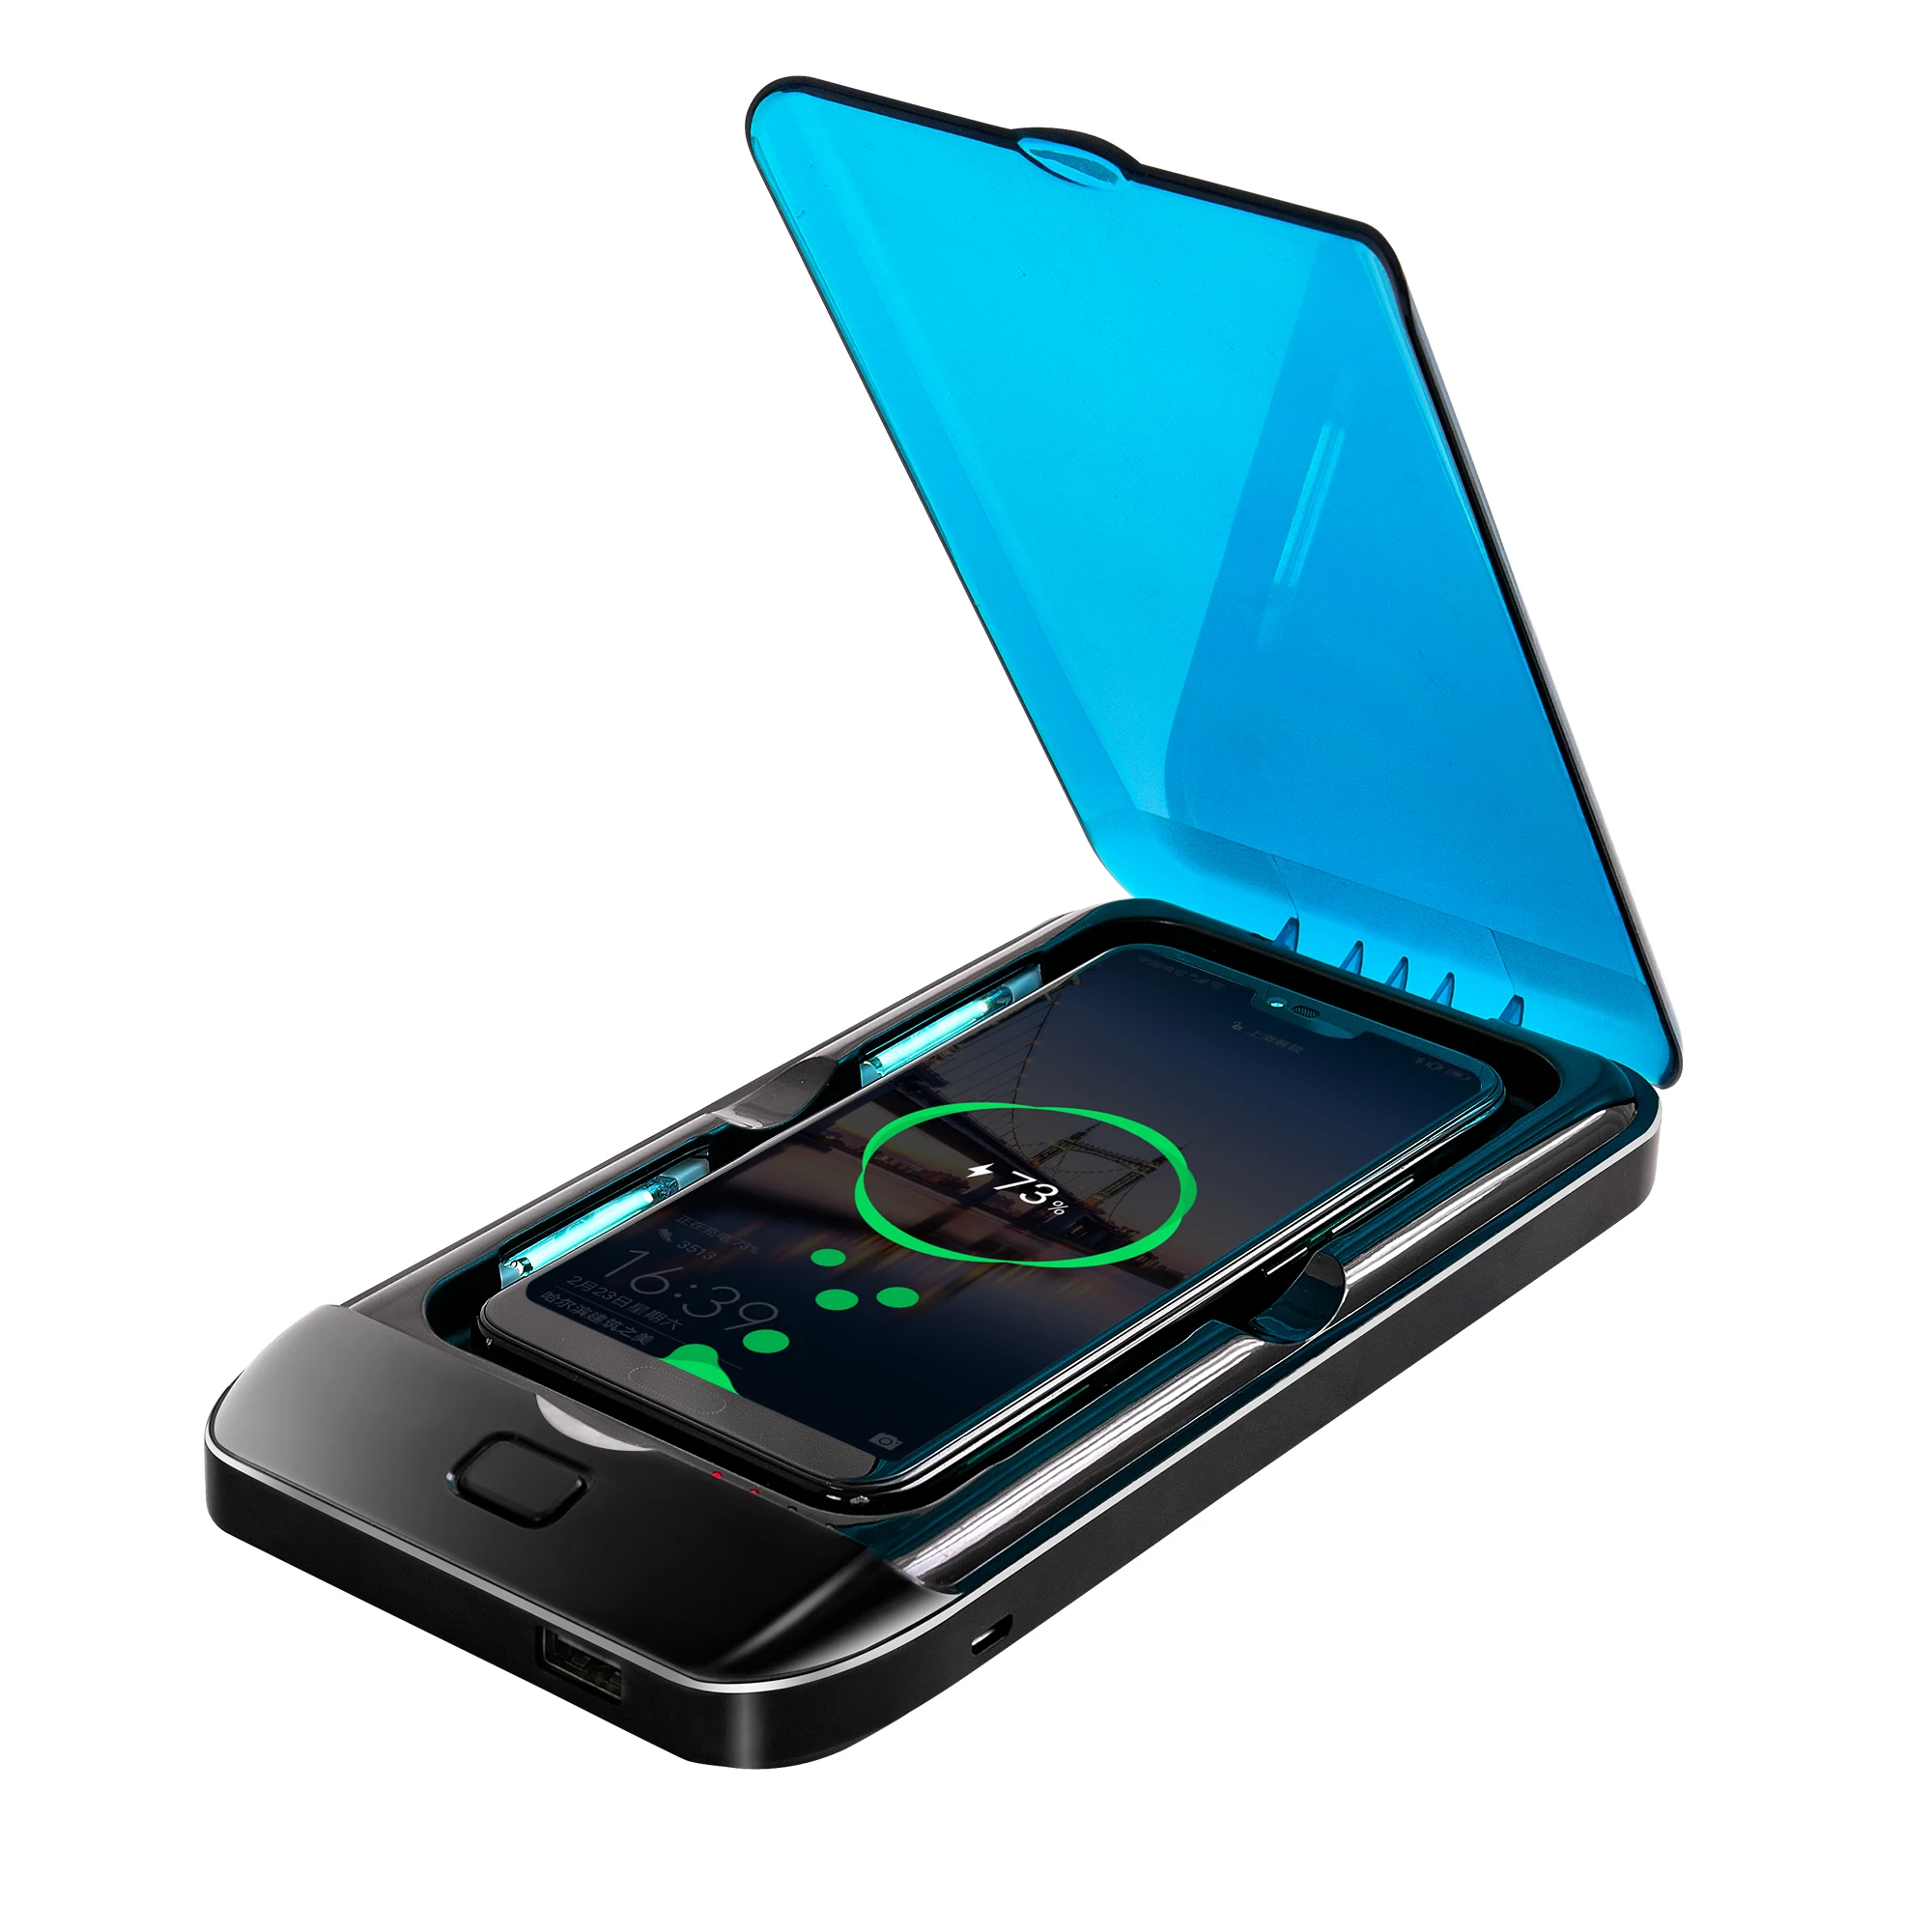 UV  lamp sterilizer for MobilePhone Sterilizer/Smartphone Sanitizer/Phone Cleaner